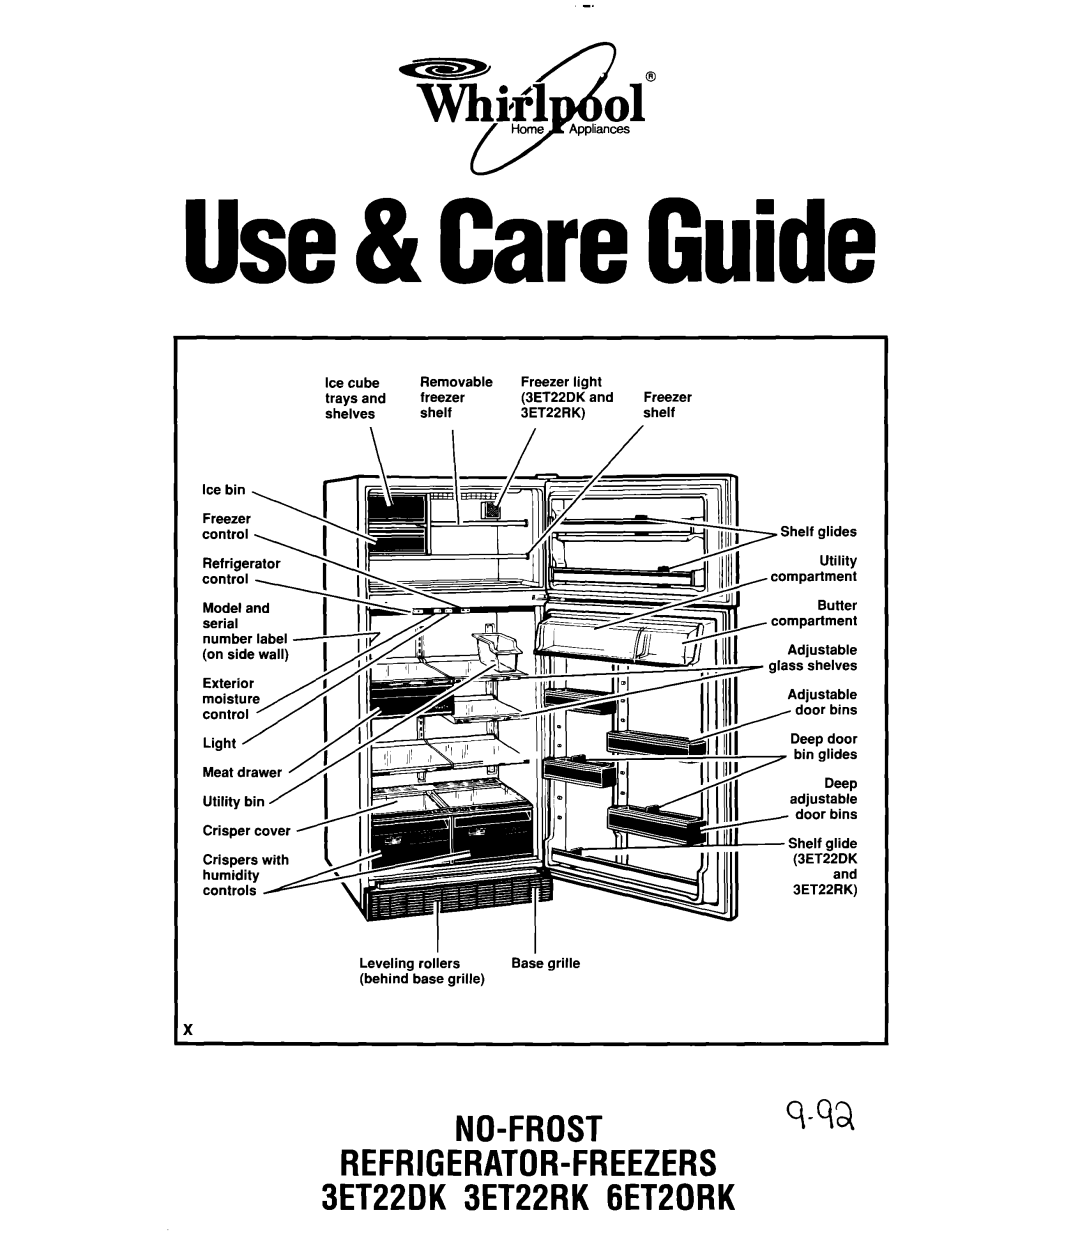 Whirlpool manual Use& CareGuide, NO-FROST s-sa, REFRIGERATOR-FREEZERS3ET22DK 3ET22RK 6ET20RK 